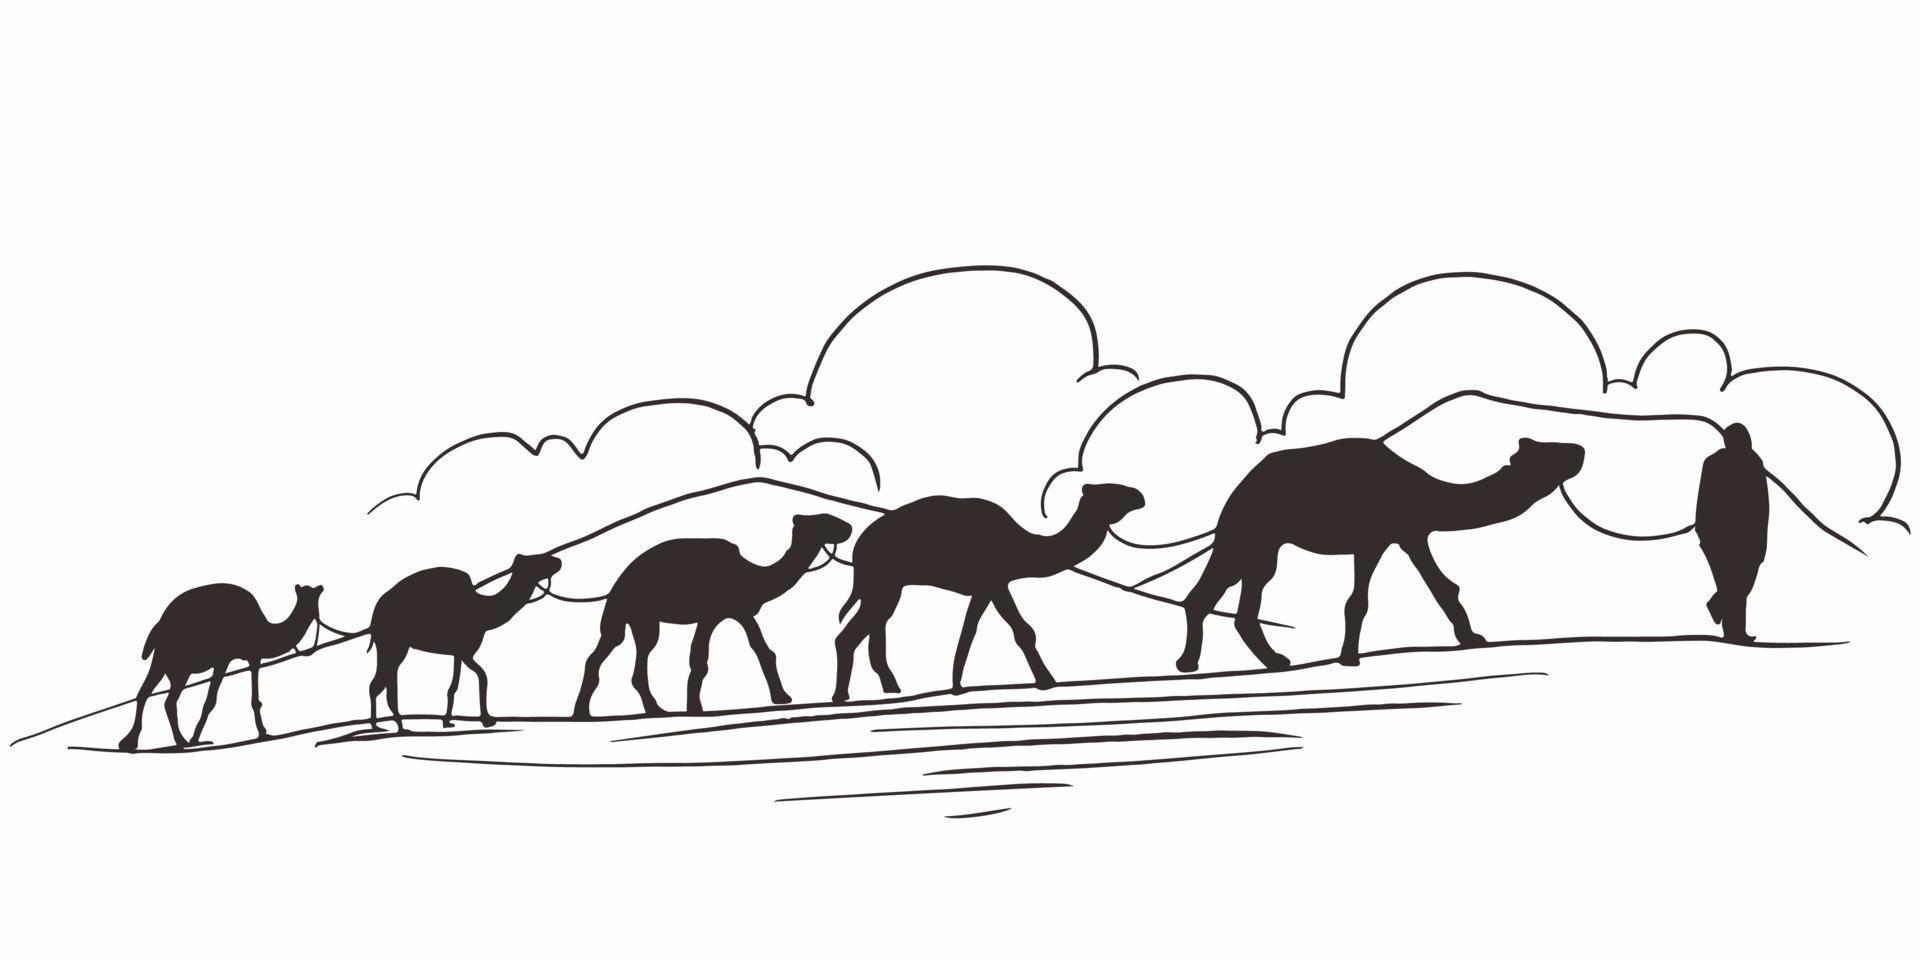 Hand drawn of Caravan with camels in desert. camel walking through the desert. Caravan going through the dunes. vector